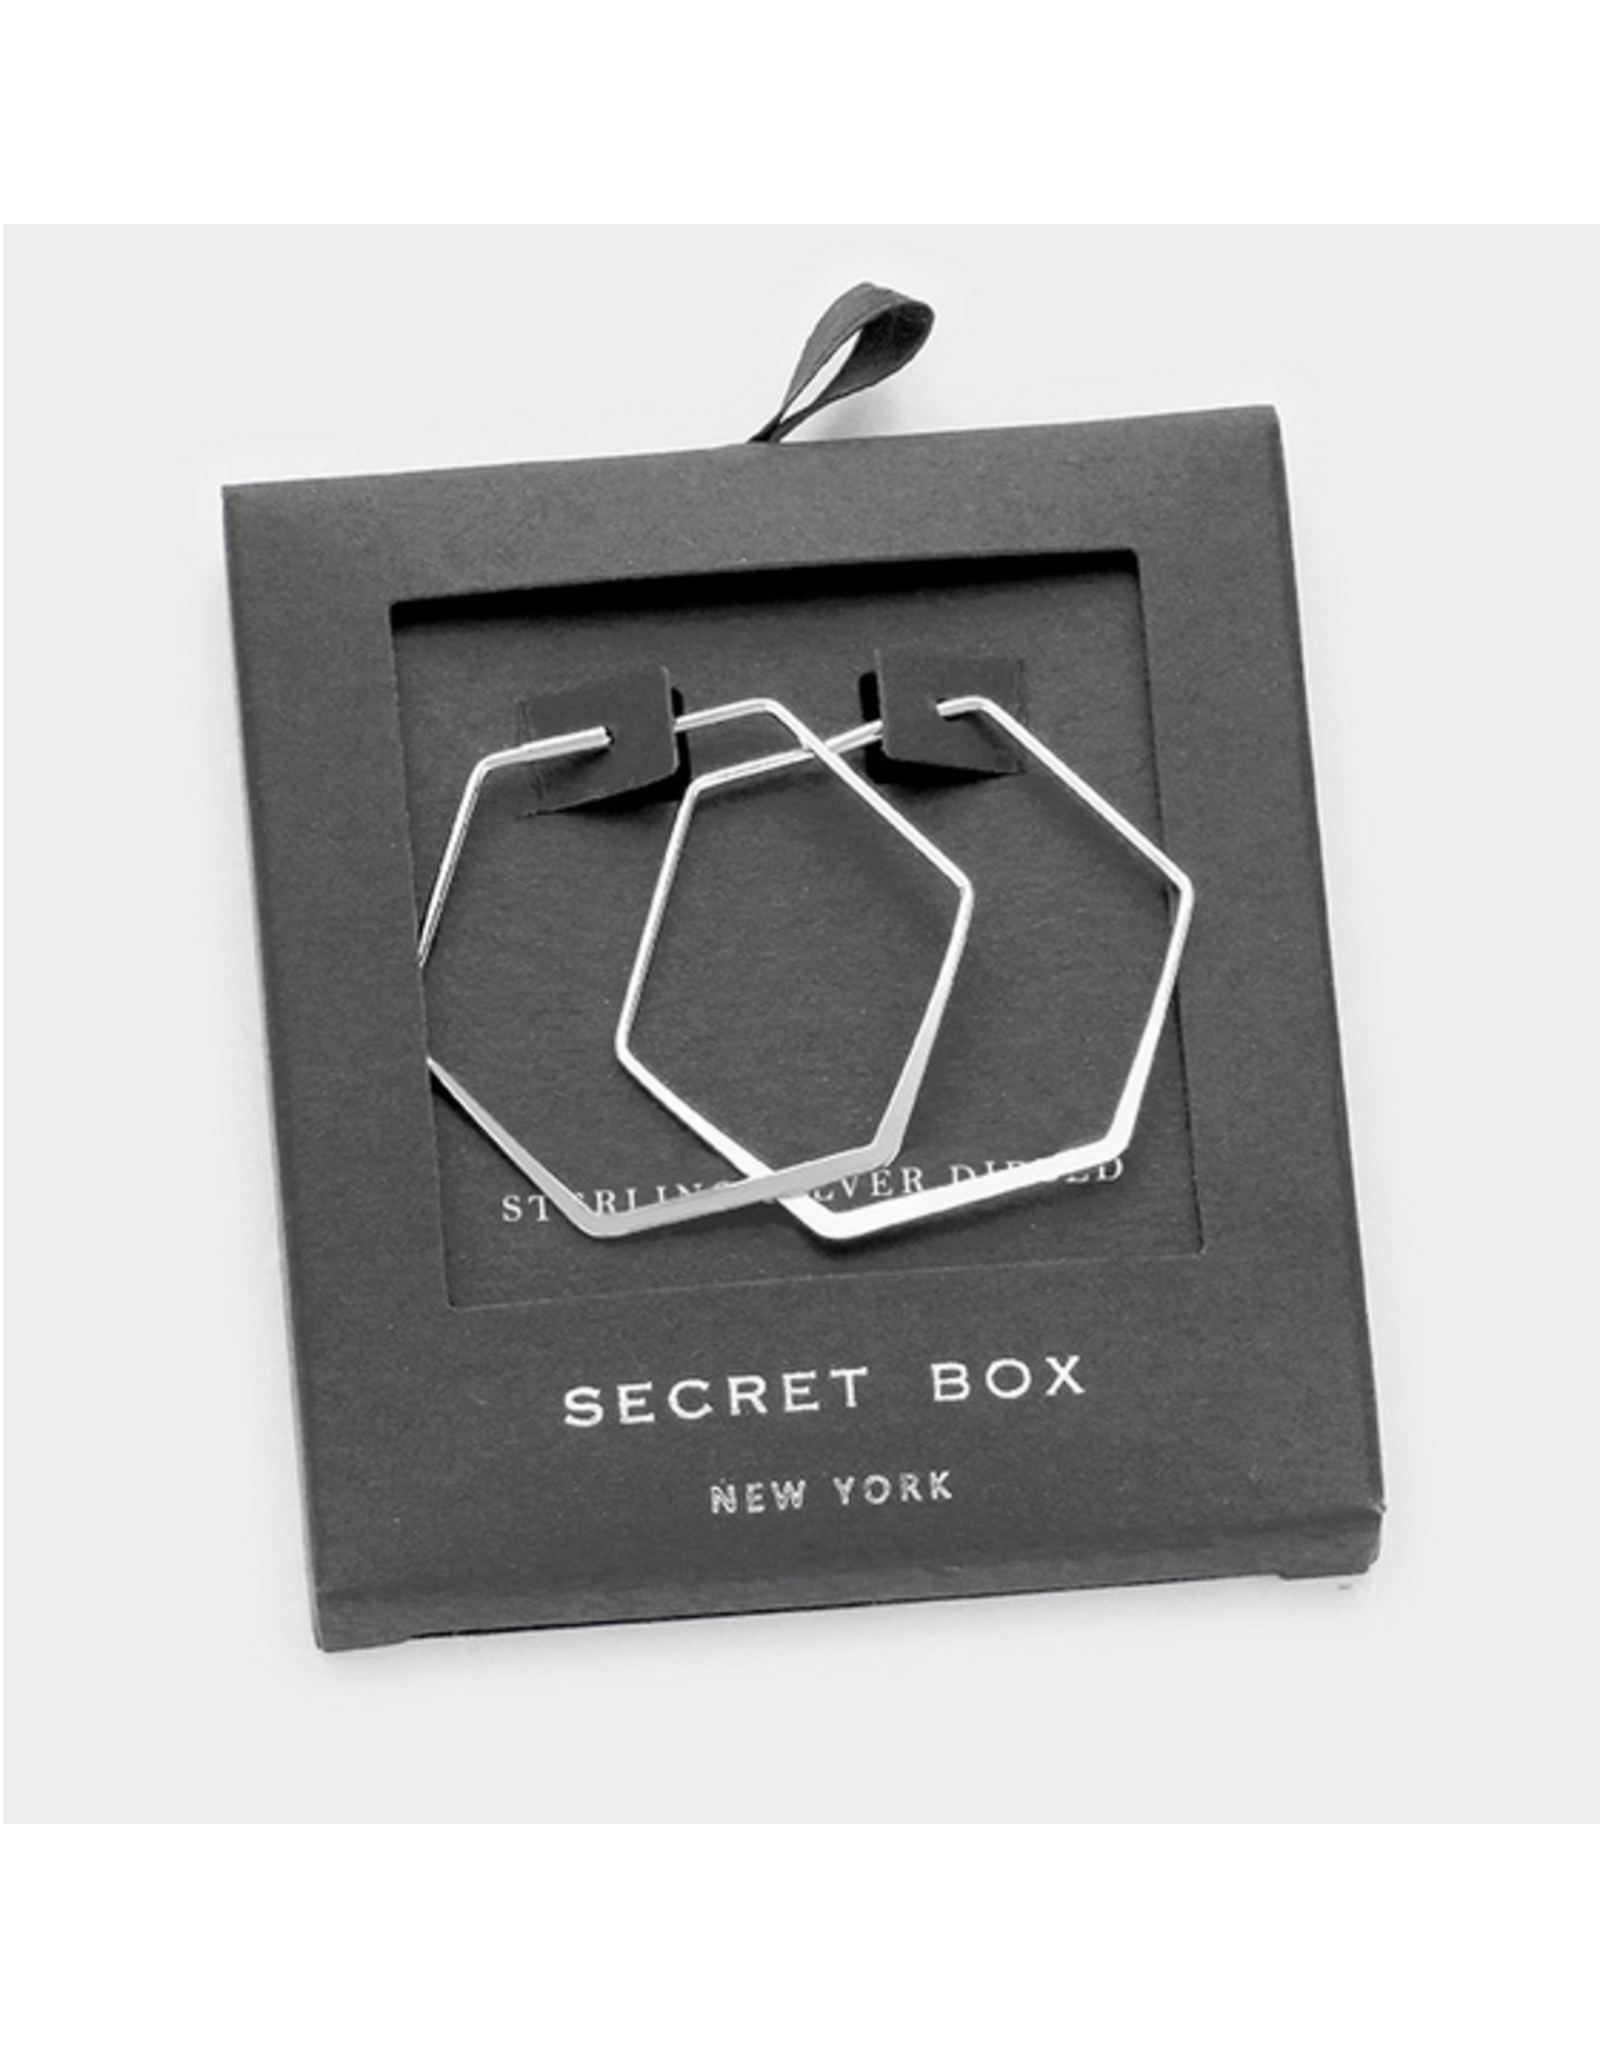 Secret Box Dipped Hexagon hoop earrings